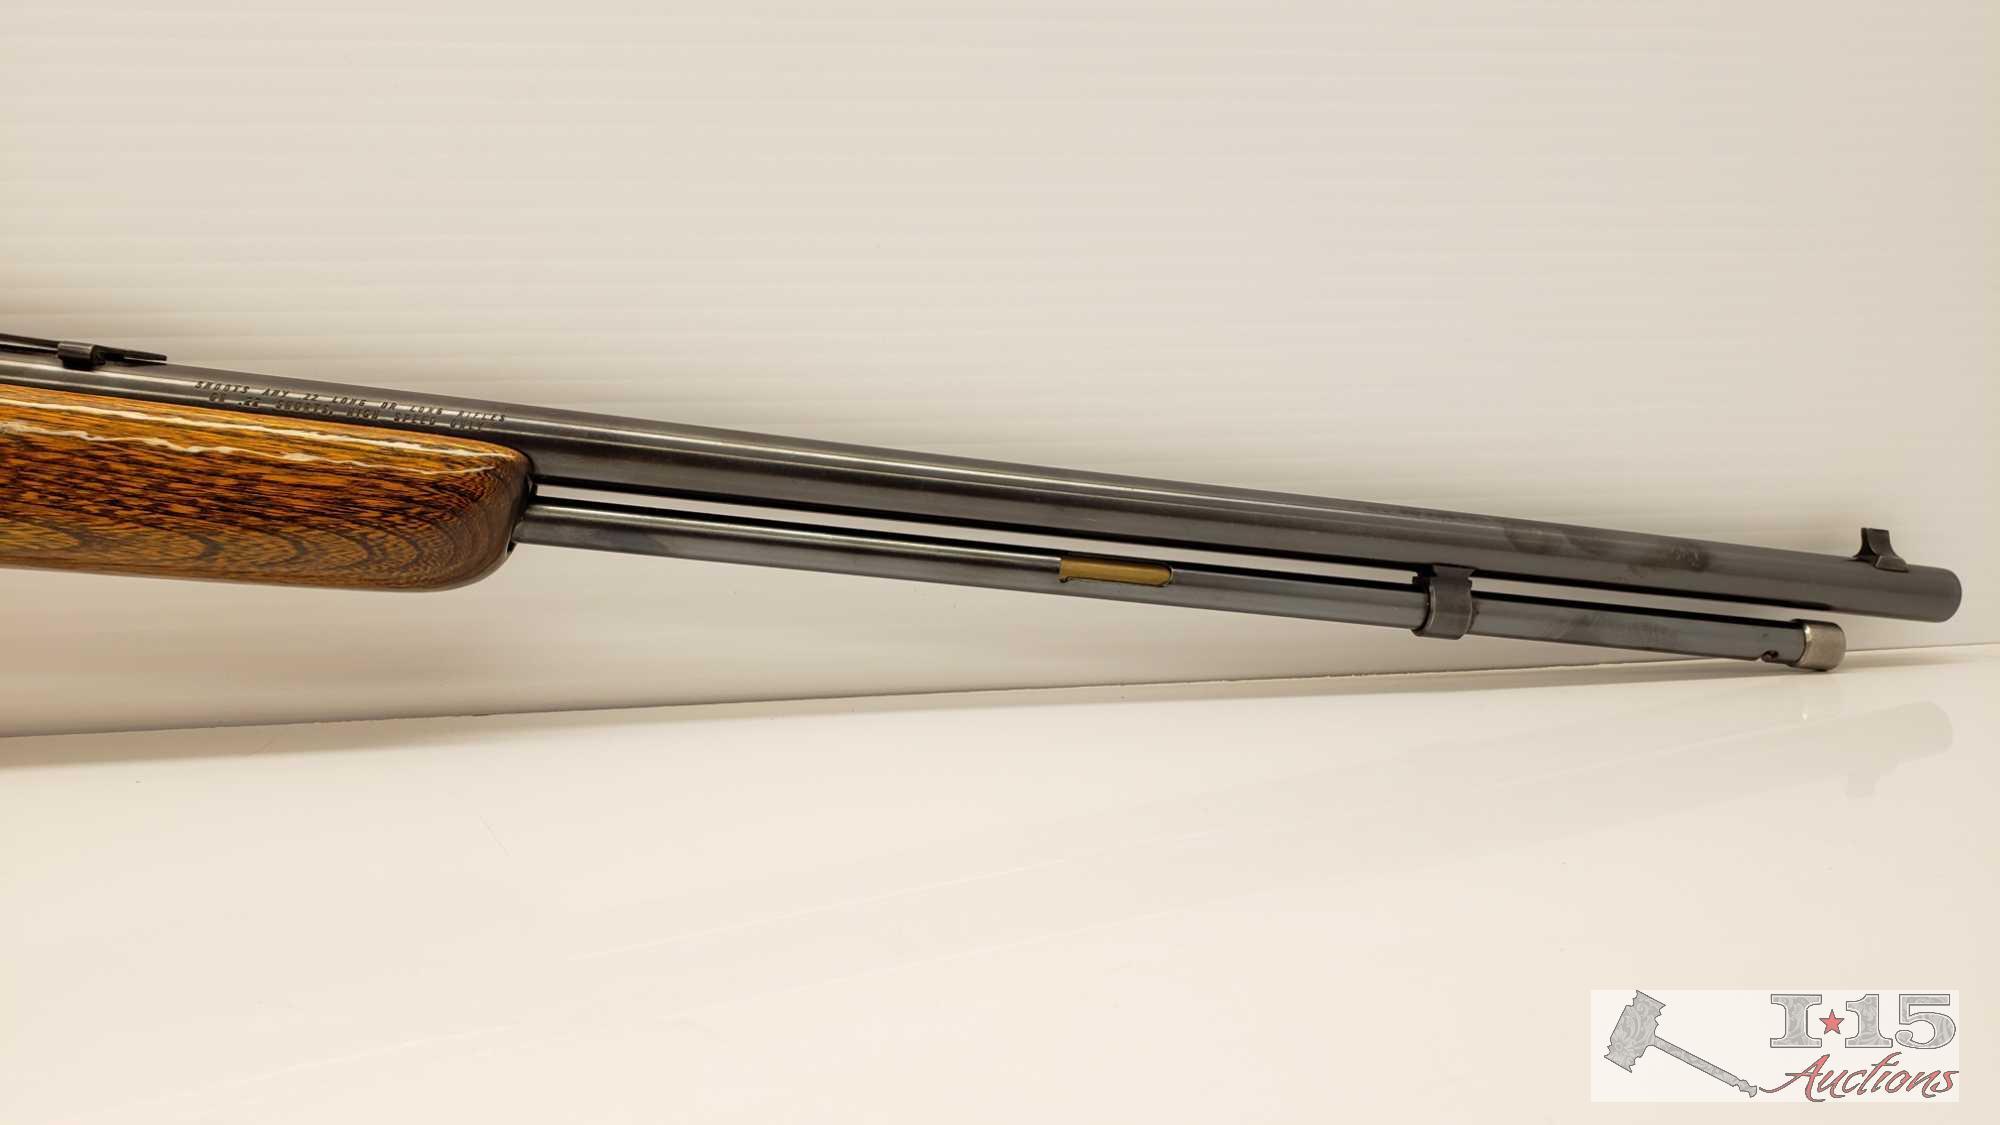 Sears and Roebuck Co Model 25 .22 Rifle